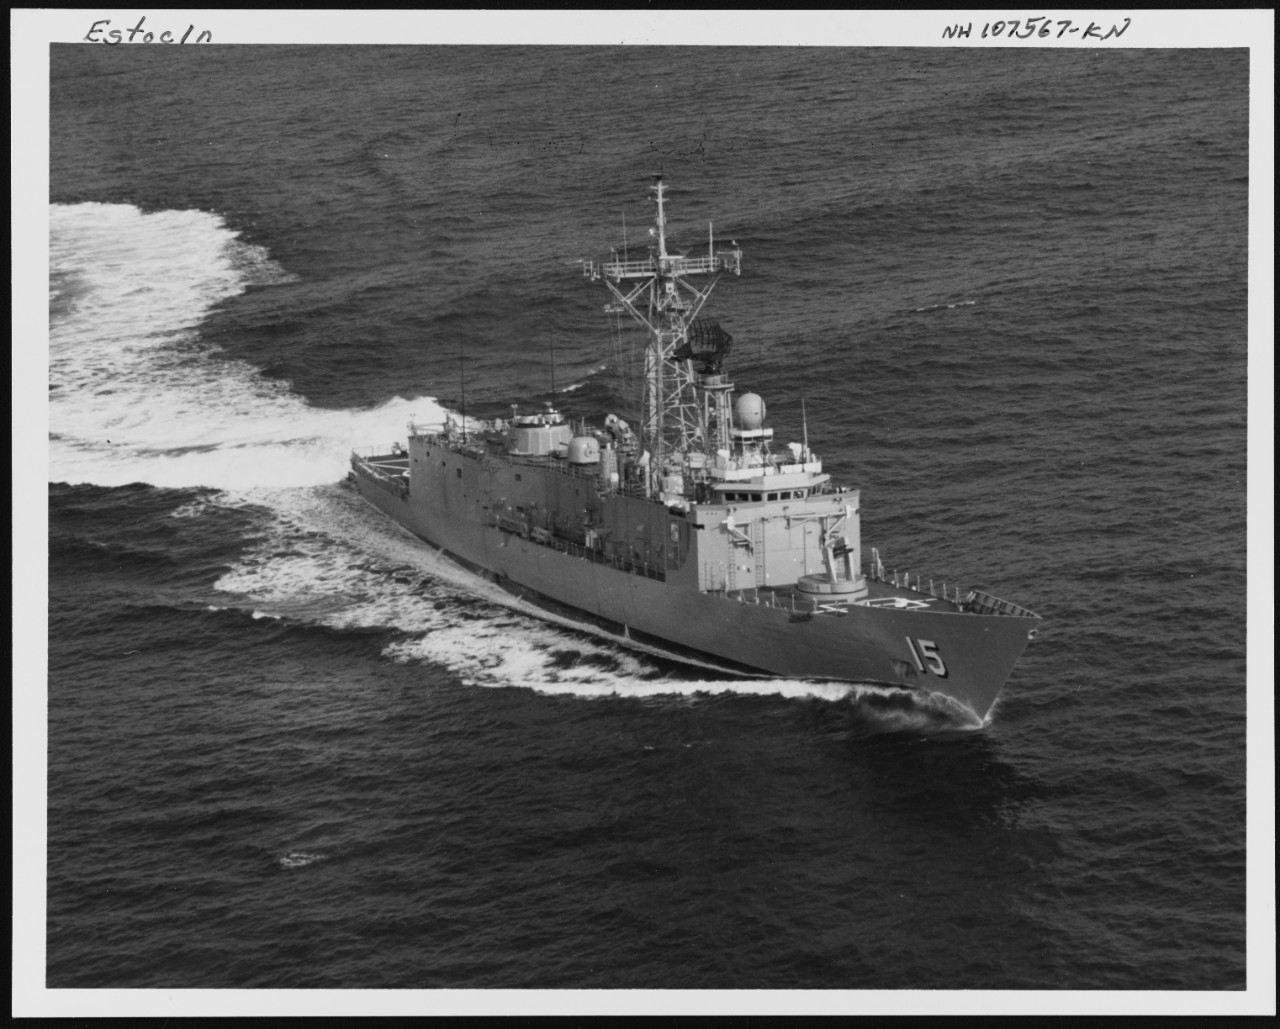 Photo #: NH 107567-KN USS Estocin